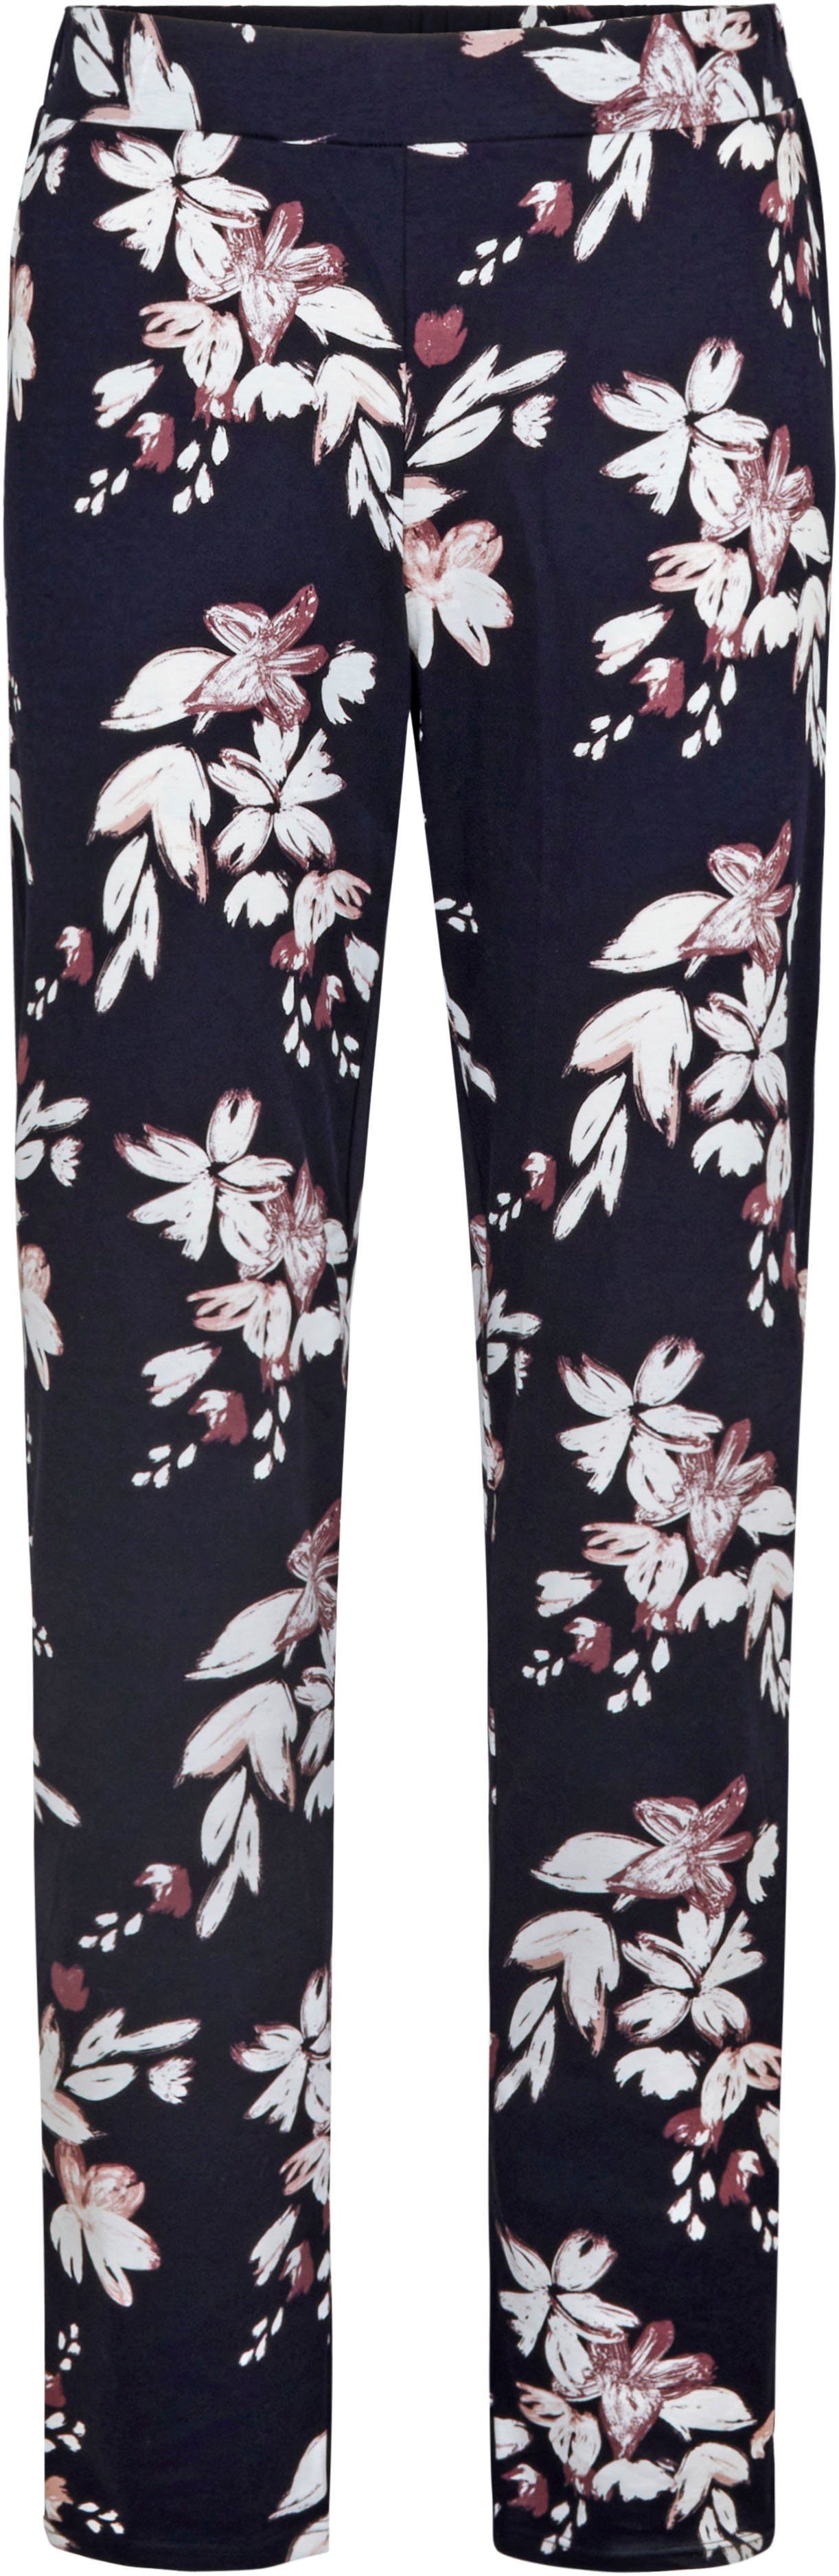 CALIDA Homewearhose Favourites Dreams dark Loungehose mit Blumendruck mit floralem Pants Muster, blue lapis